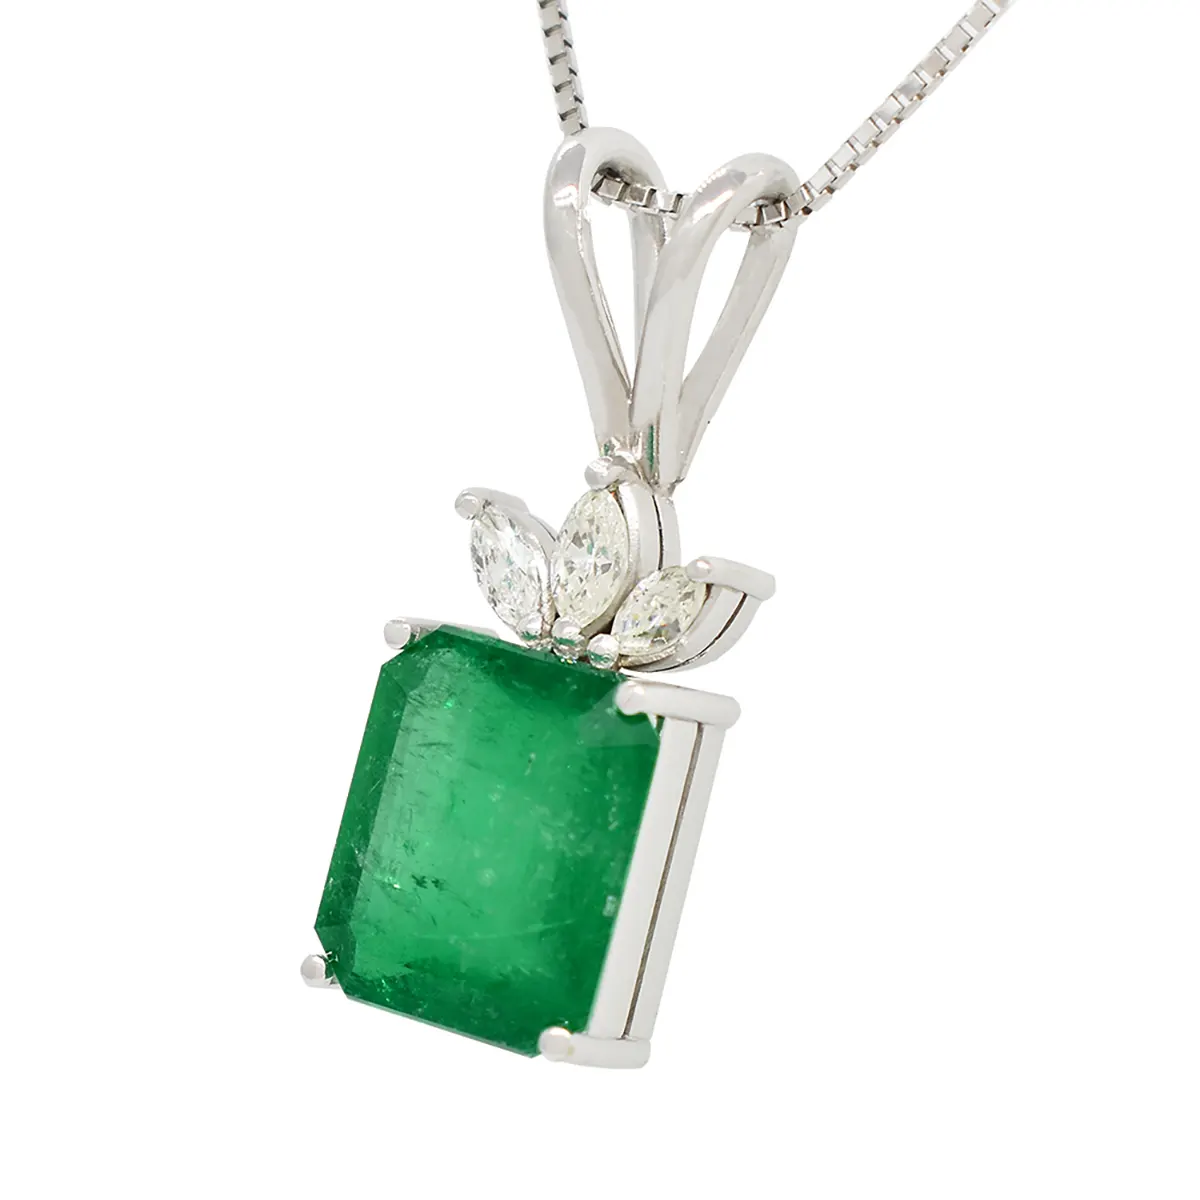 Emerald and Diamond Pendant in 18K White Gold With Emerald Cut Emerald and Marquise Shape Diamonds